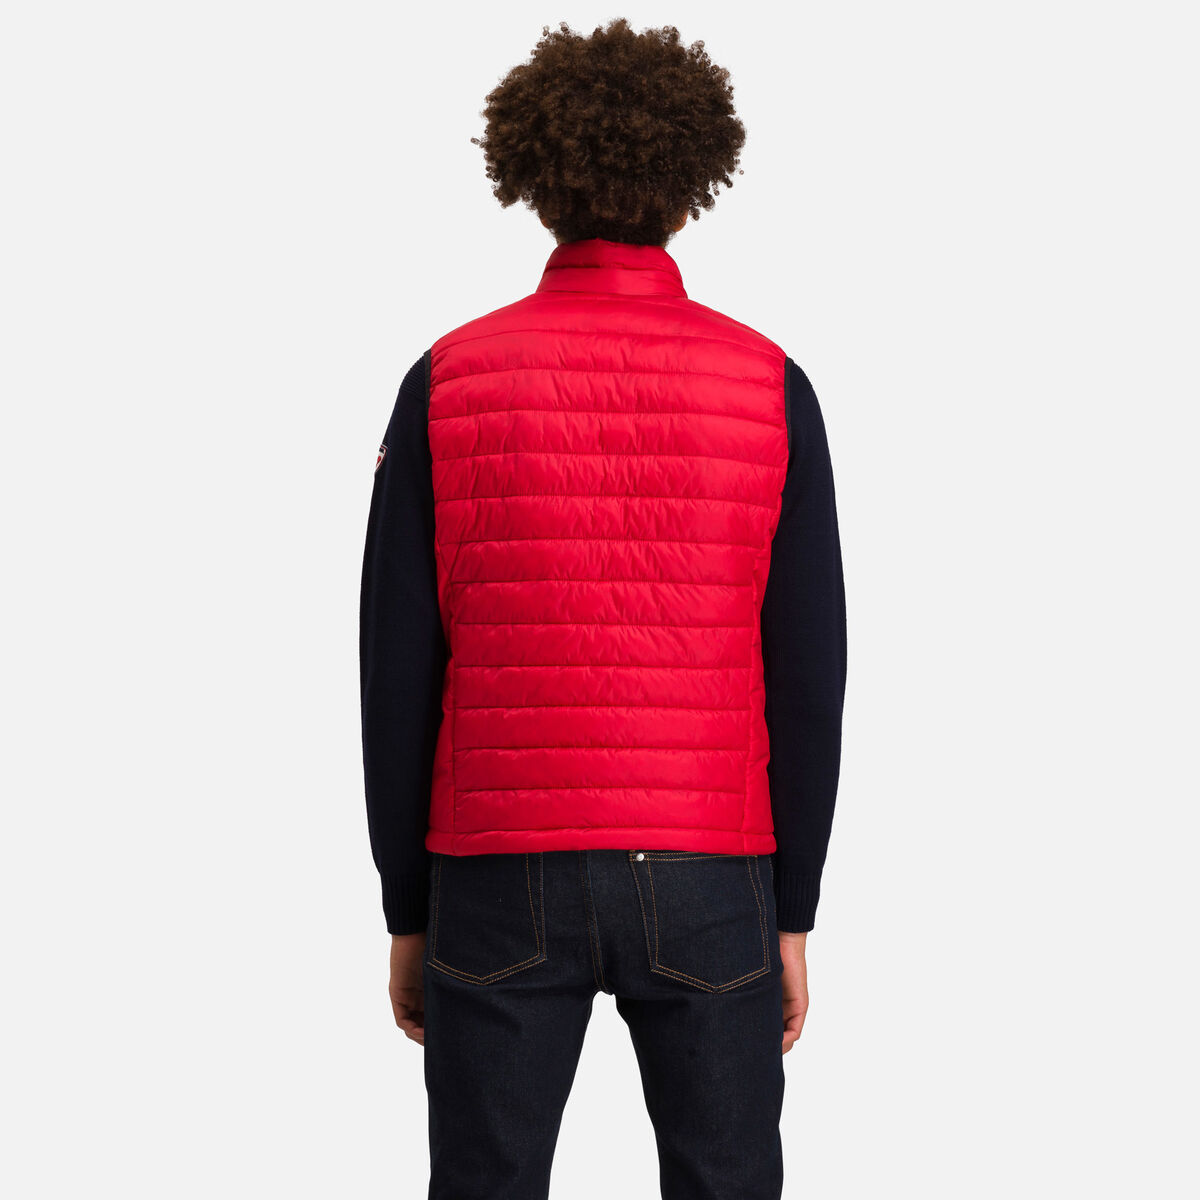 Men's insulated vest 180GR